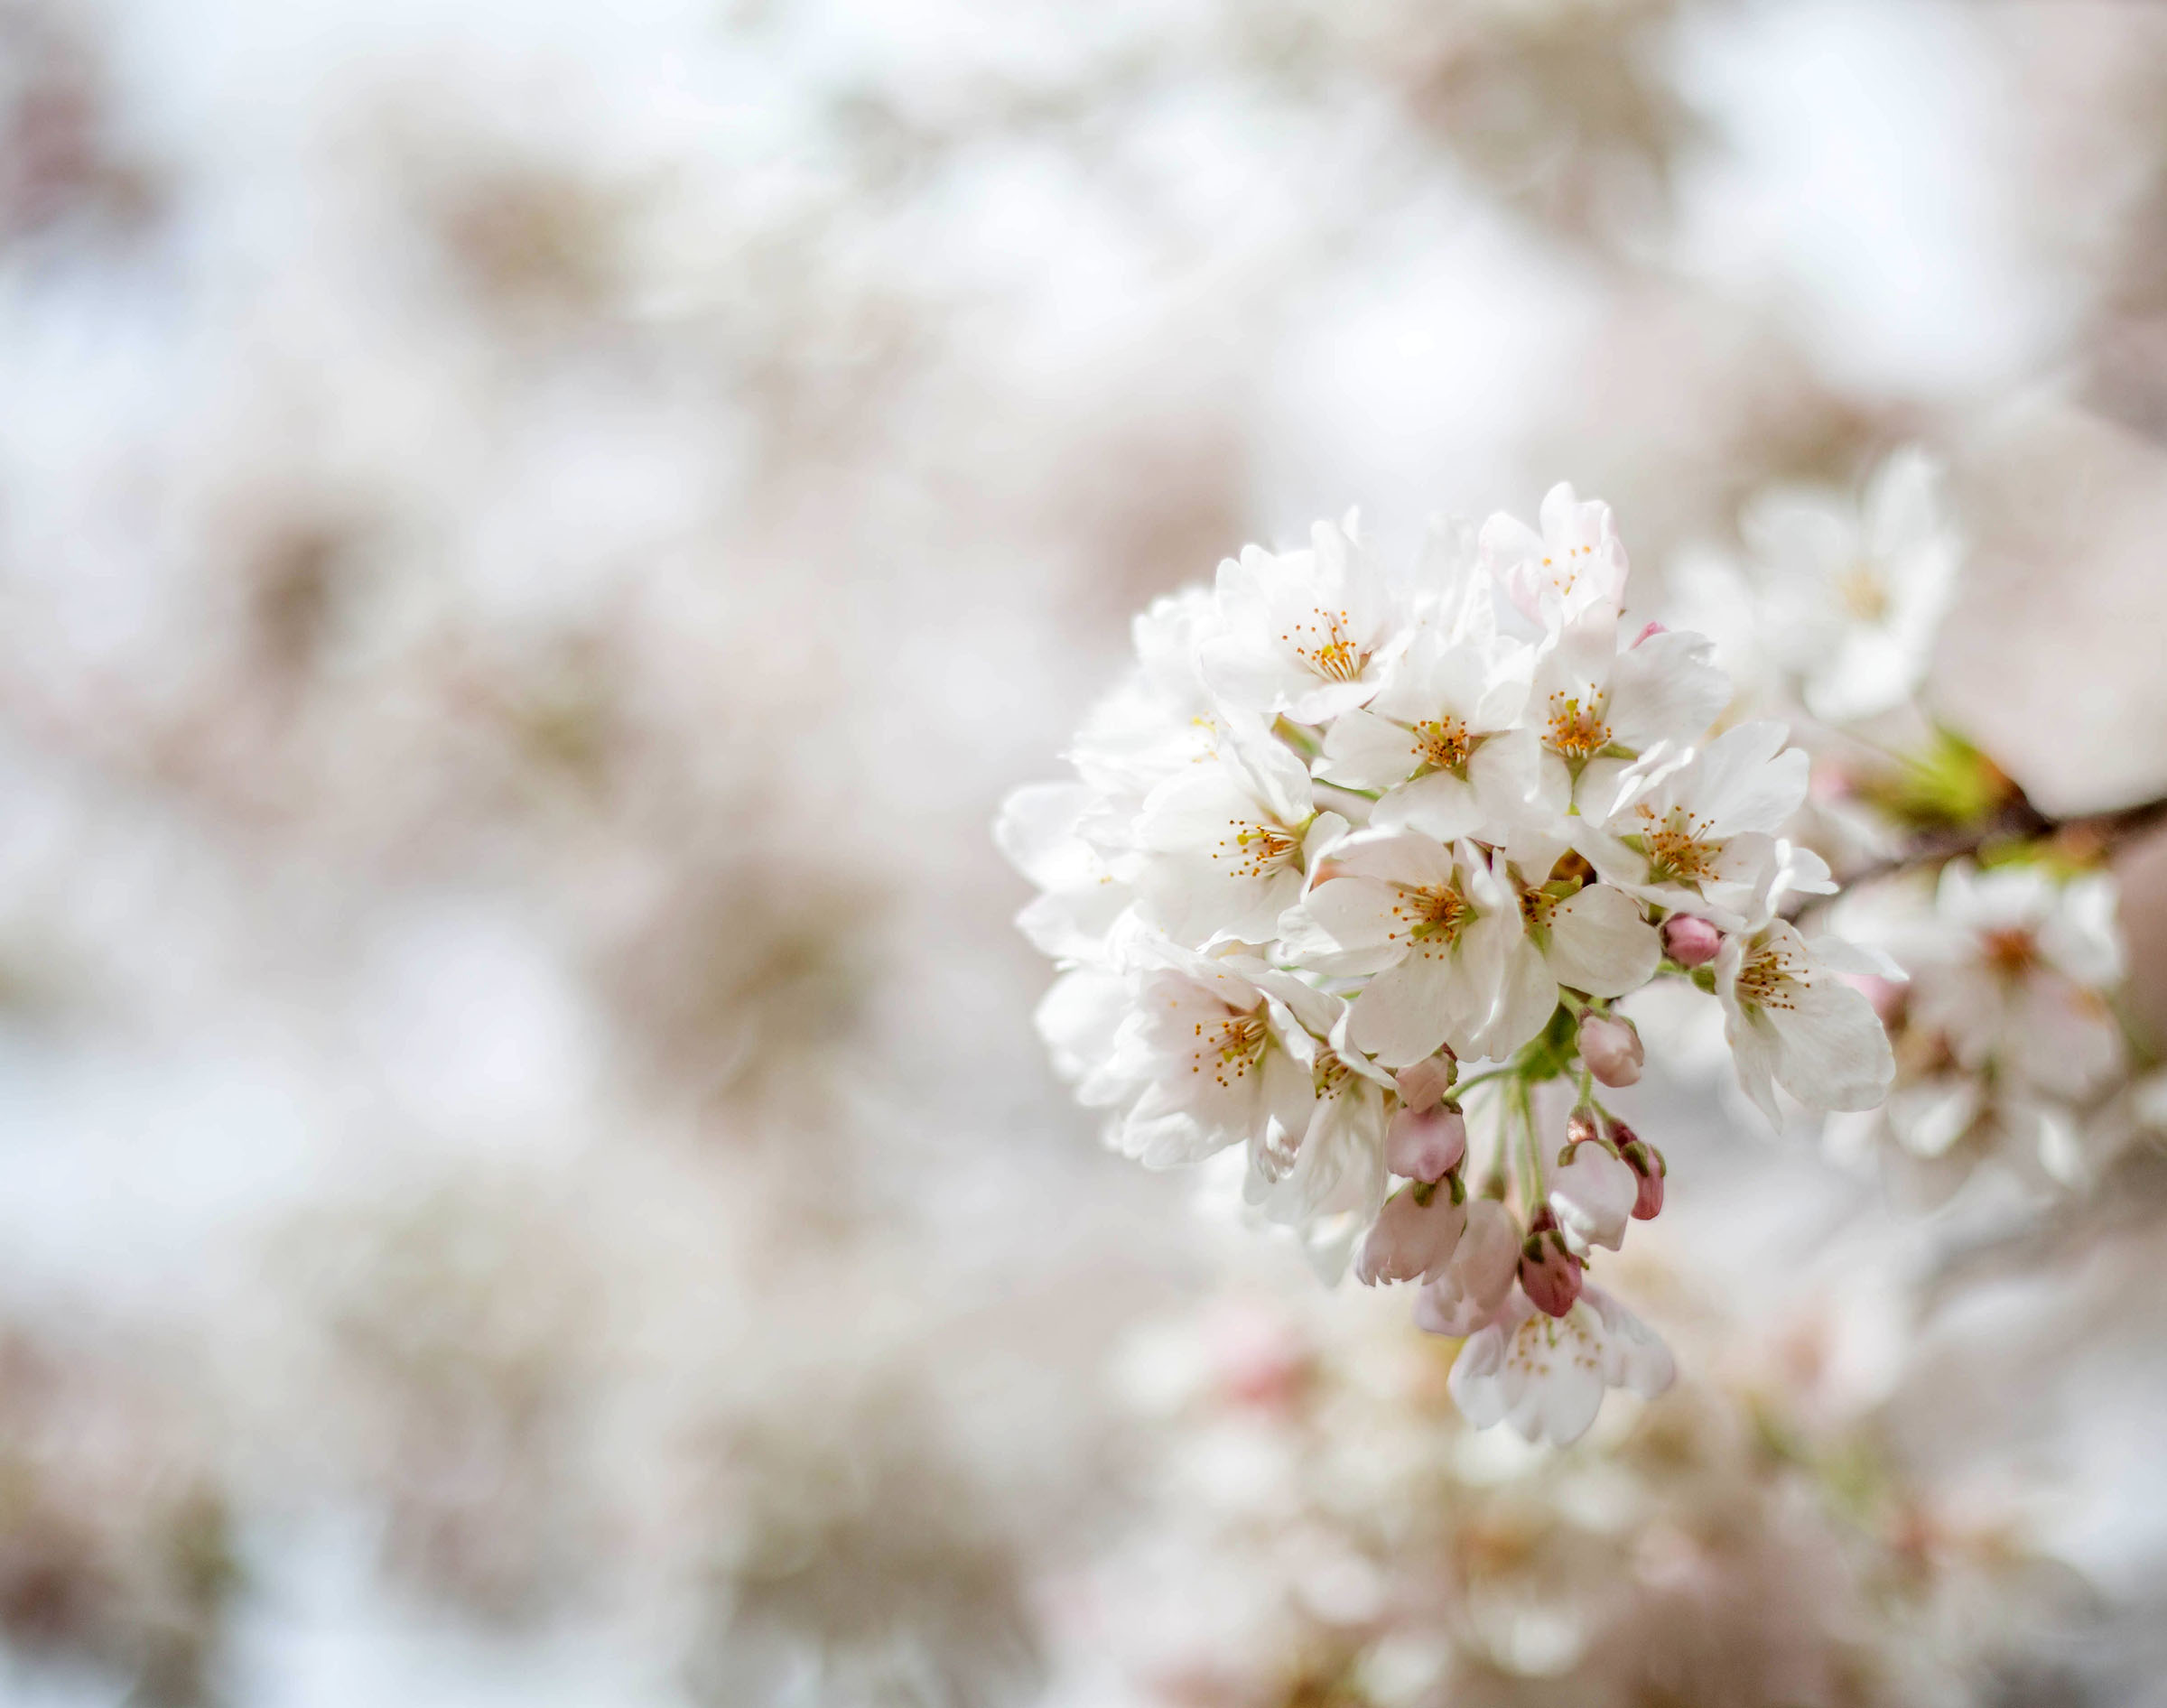 A single cherry blossom